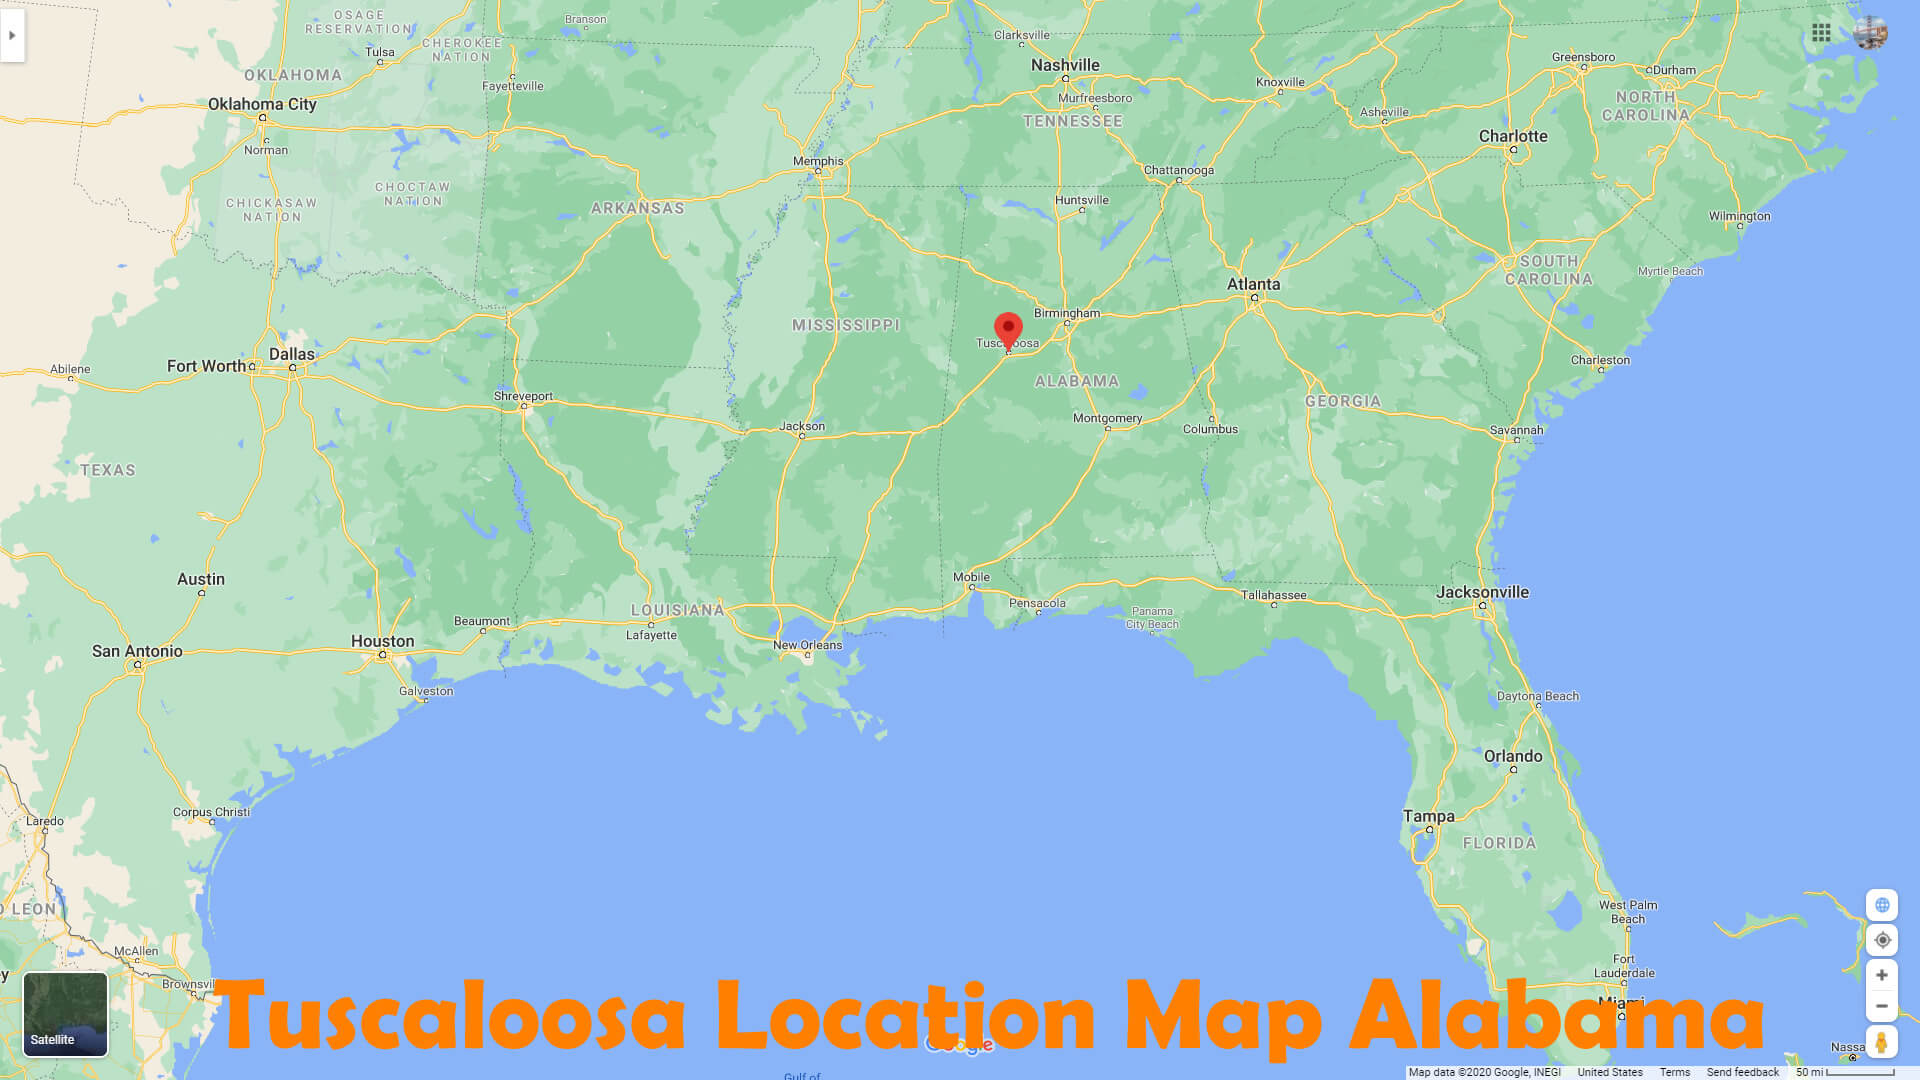 Tuscaloosa Location Map Alabama